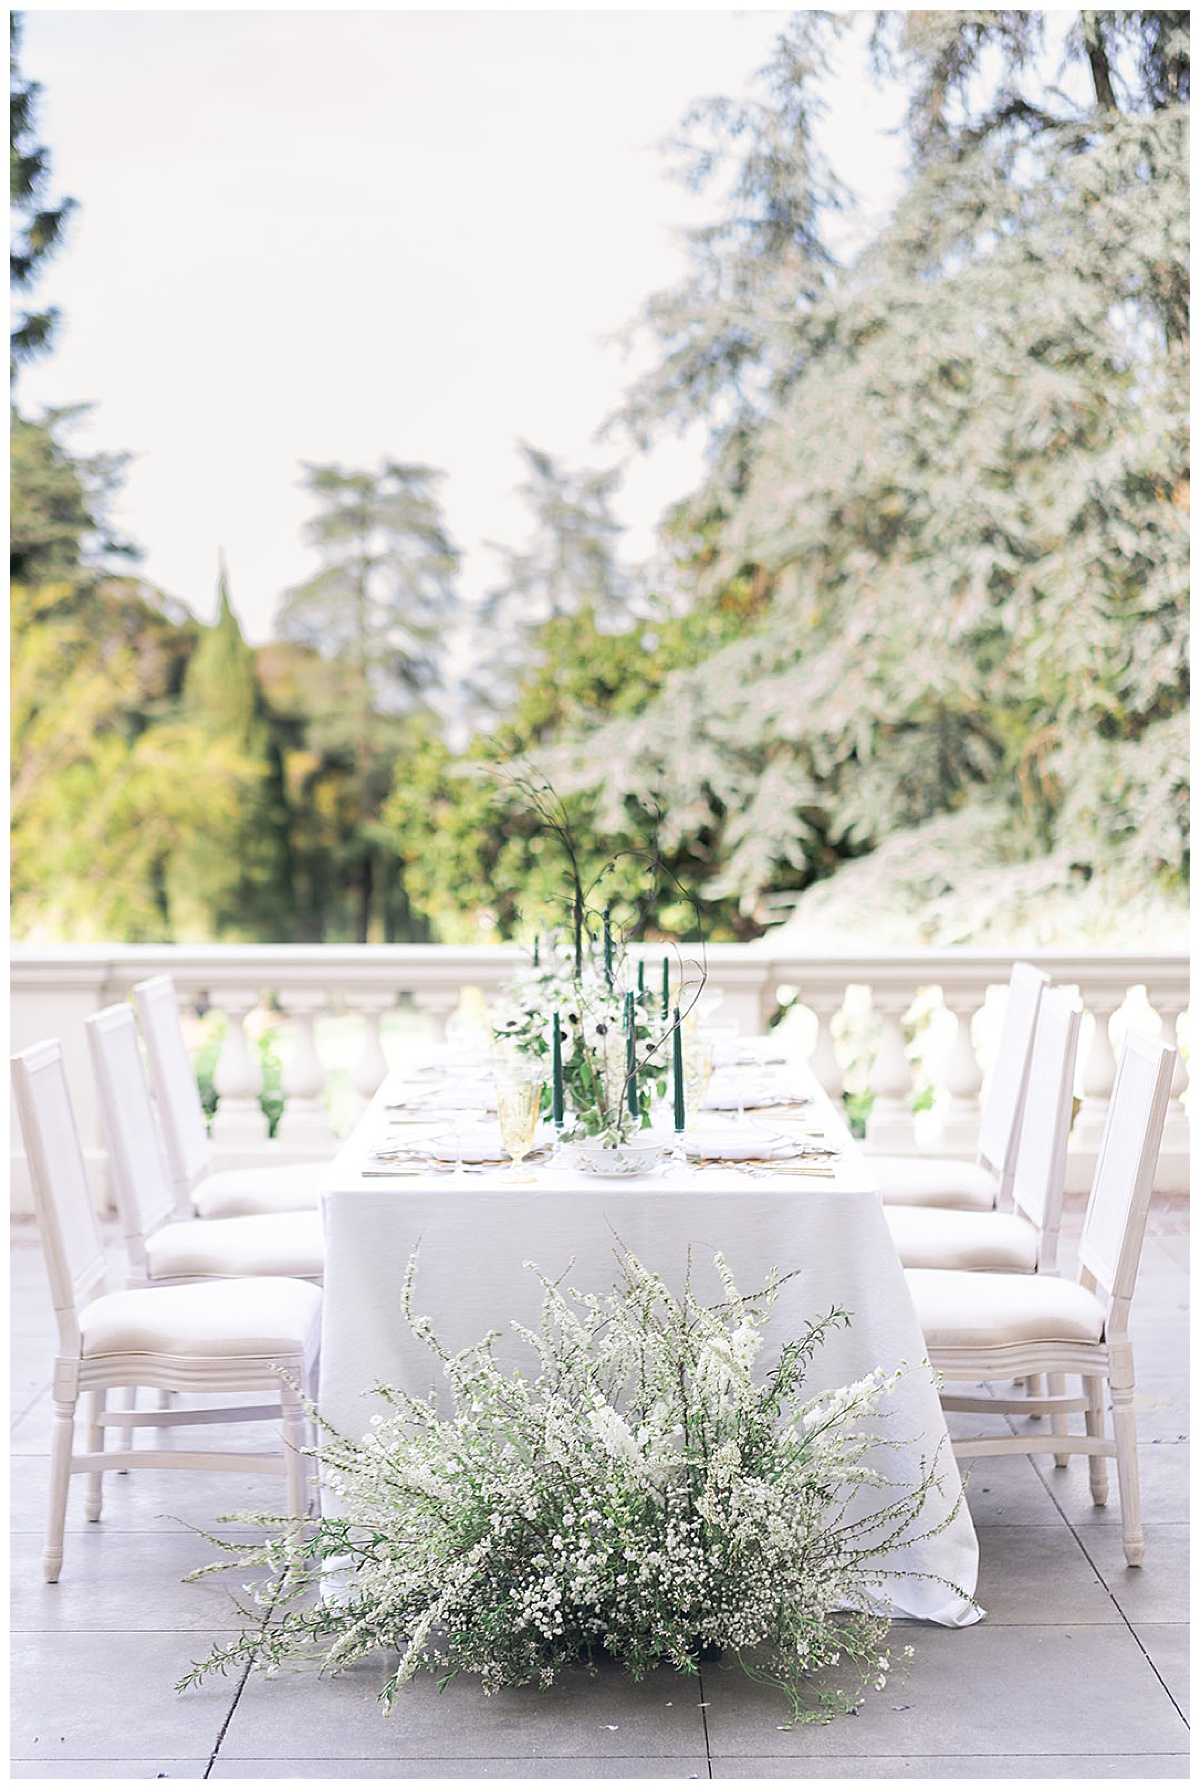 Stunning wedding table floral decor for Editorial at Villa Montalvo